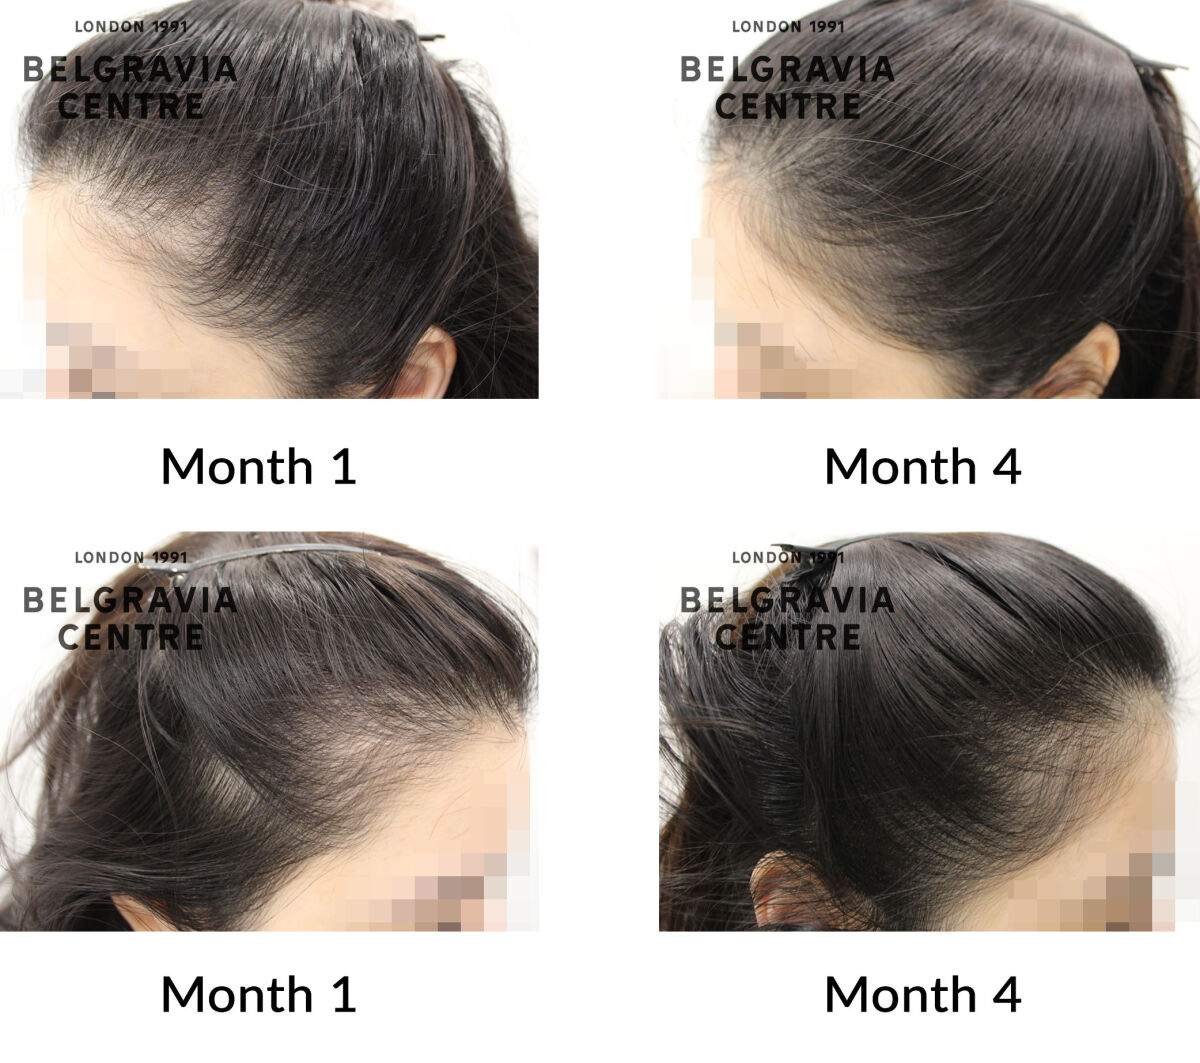 female pattern hair loss the belgravia centre 450530